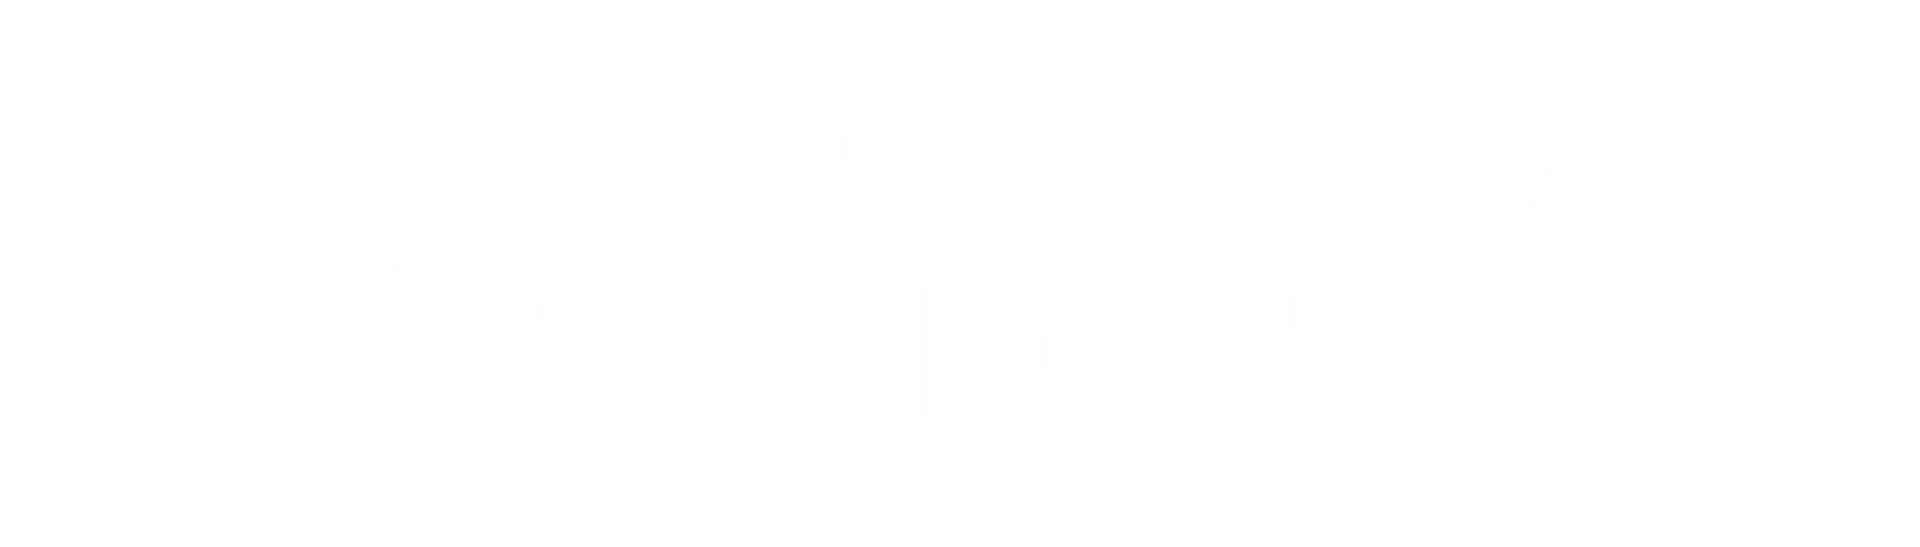 appwebcoder white logo